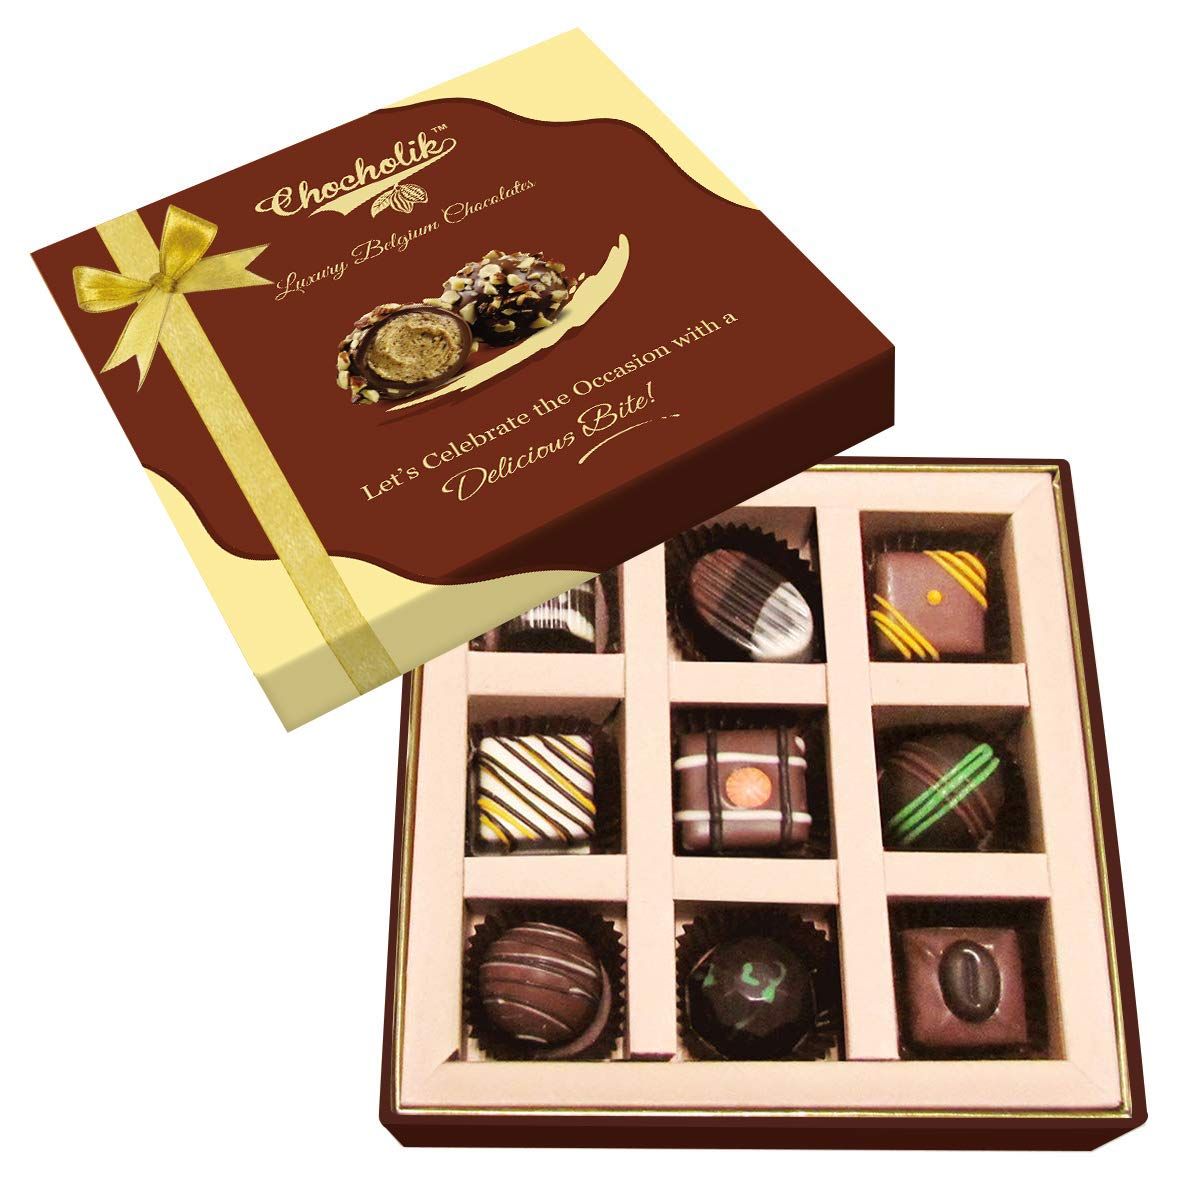 Chocholik Gift Box Mouth Watering Collection of Belgium Chocolate Box Image